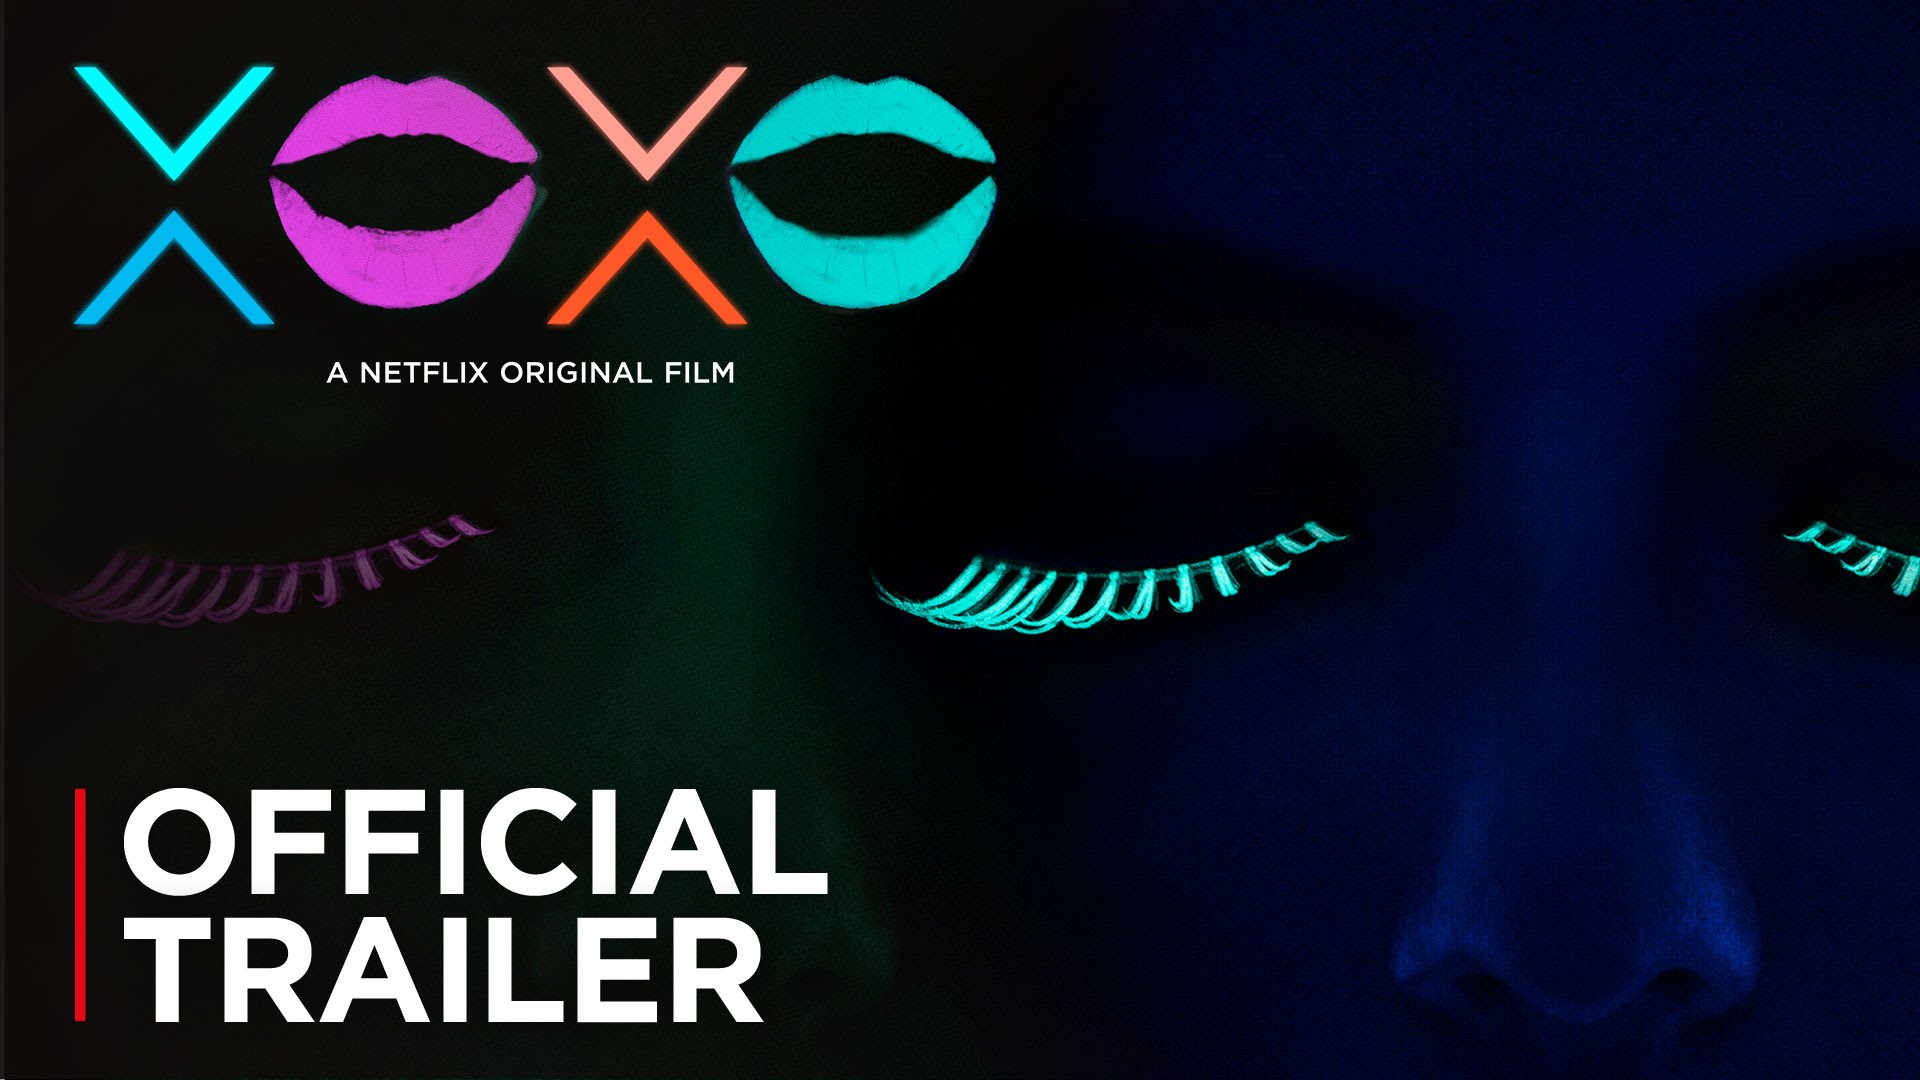 XOXO | Official Trailer [HD] | Netflix - YouTube